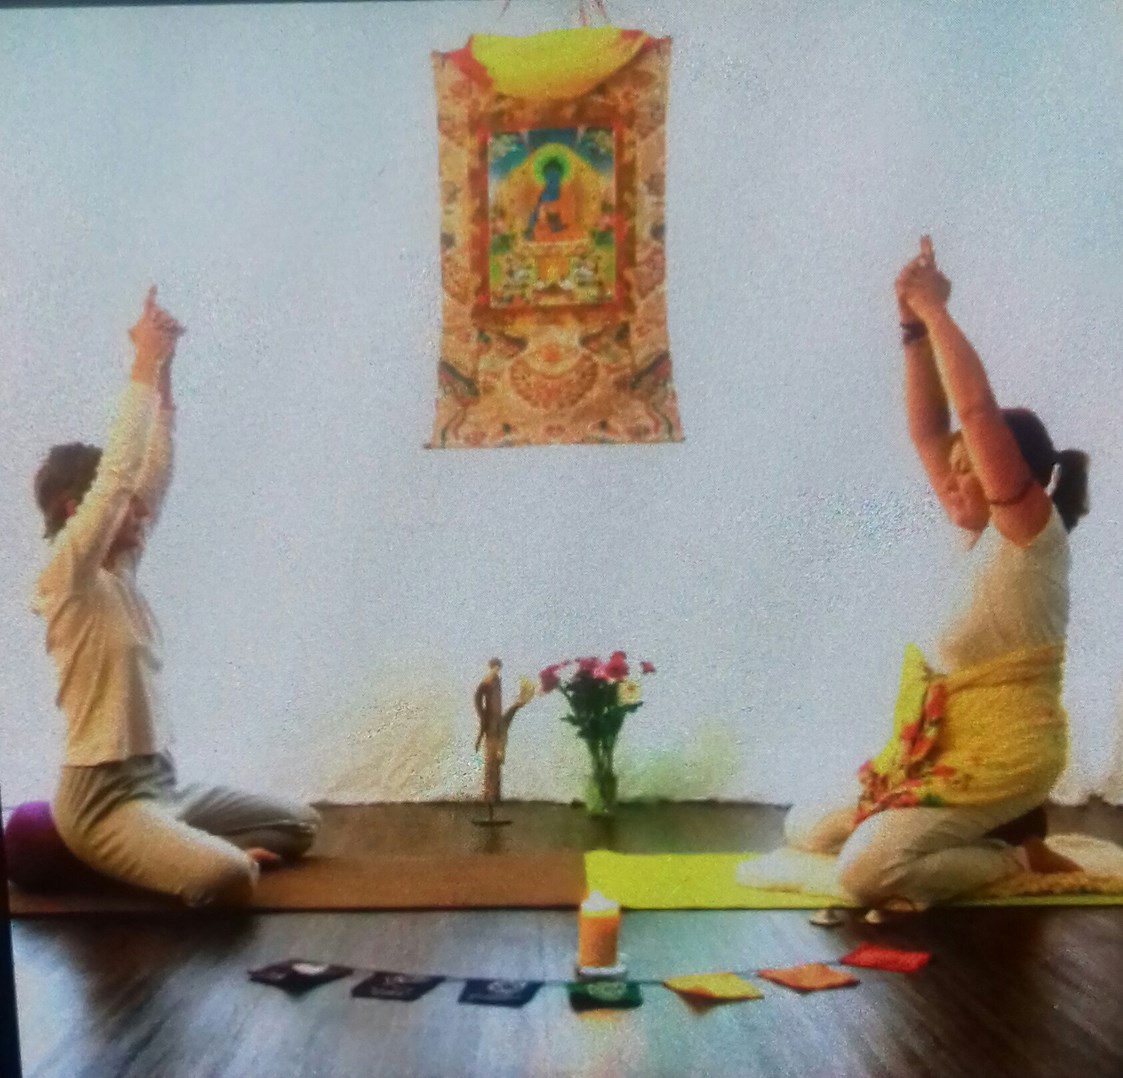 Yoga: Kundalini Yoga Einzel in meiner Praxis
hier: Sat Krija - Kundalini Yoga van Amern